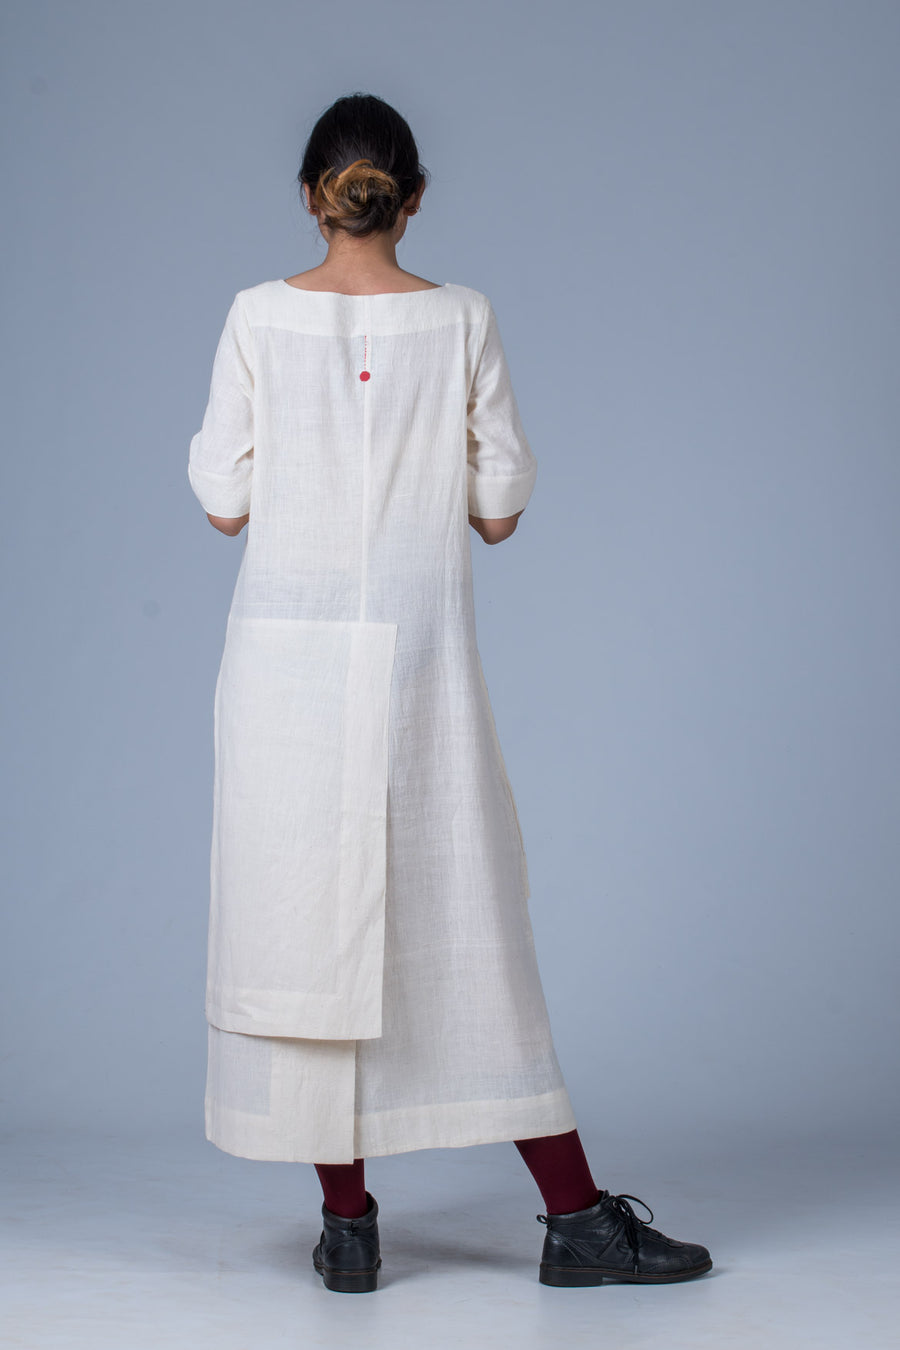 Off white Desi Cotton Dress - SANGYA - Upasana Design Studio